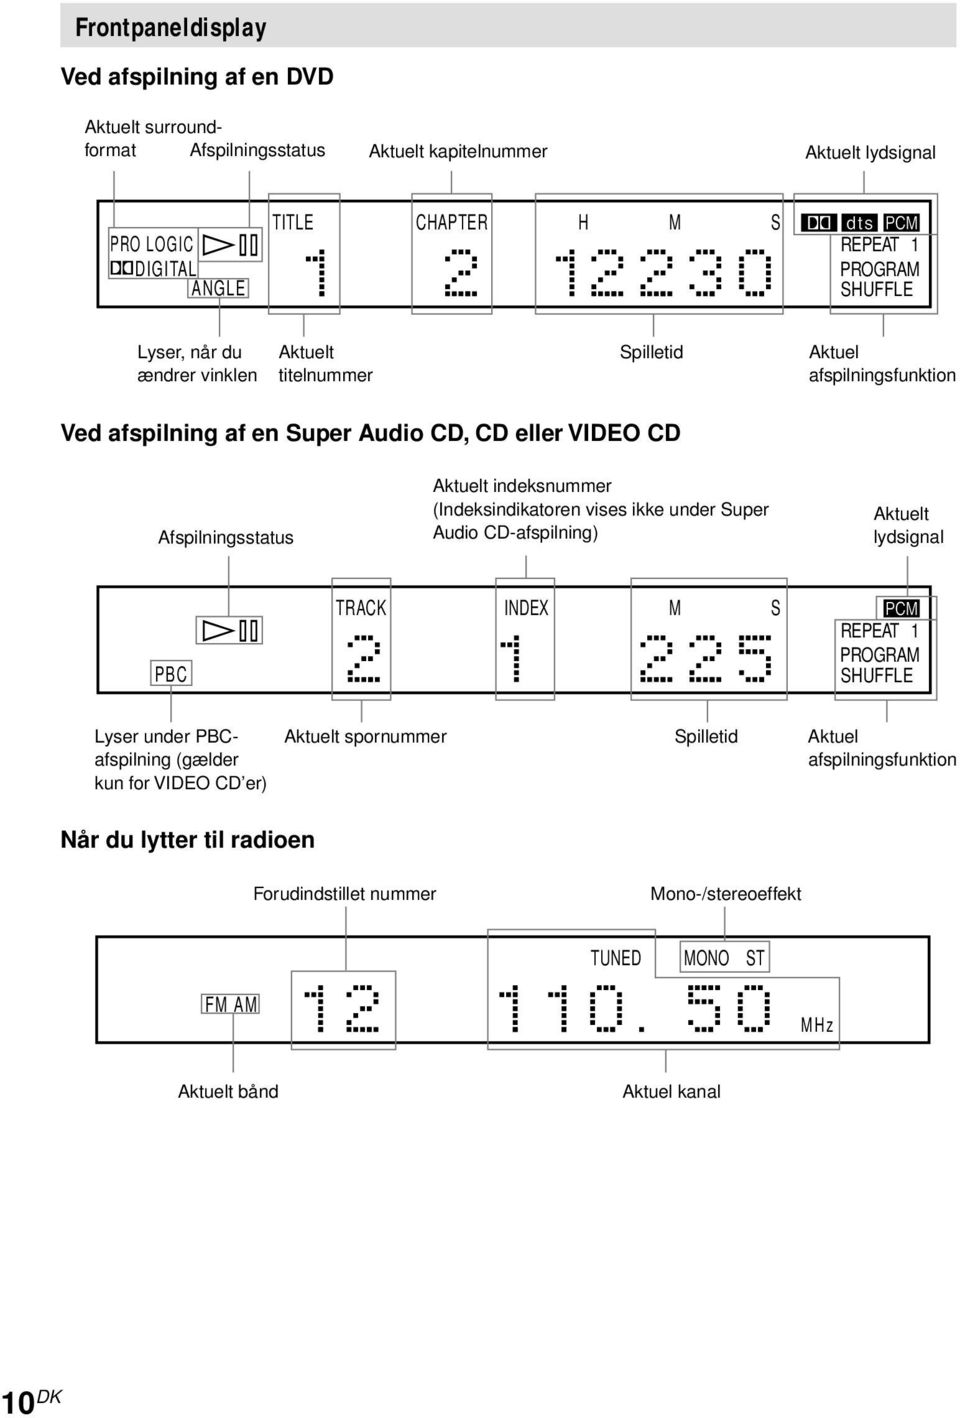 CD Afspilningsstatus Aktuelt indeksnummer (Indeksindikatoren vises ikke under Super Audio CD-afspilning) Aktuelt lydsignal ALL 1DISC S AUTO DIGITAL FM AM NTSCPBC ANGLE TITLE TRACK CHAPTER INDEX H